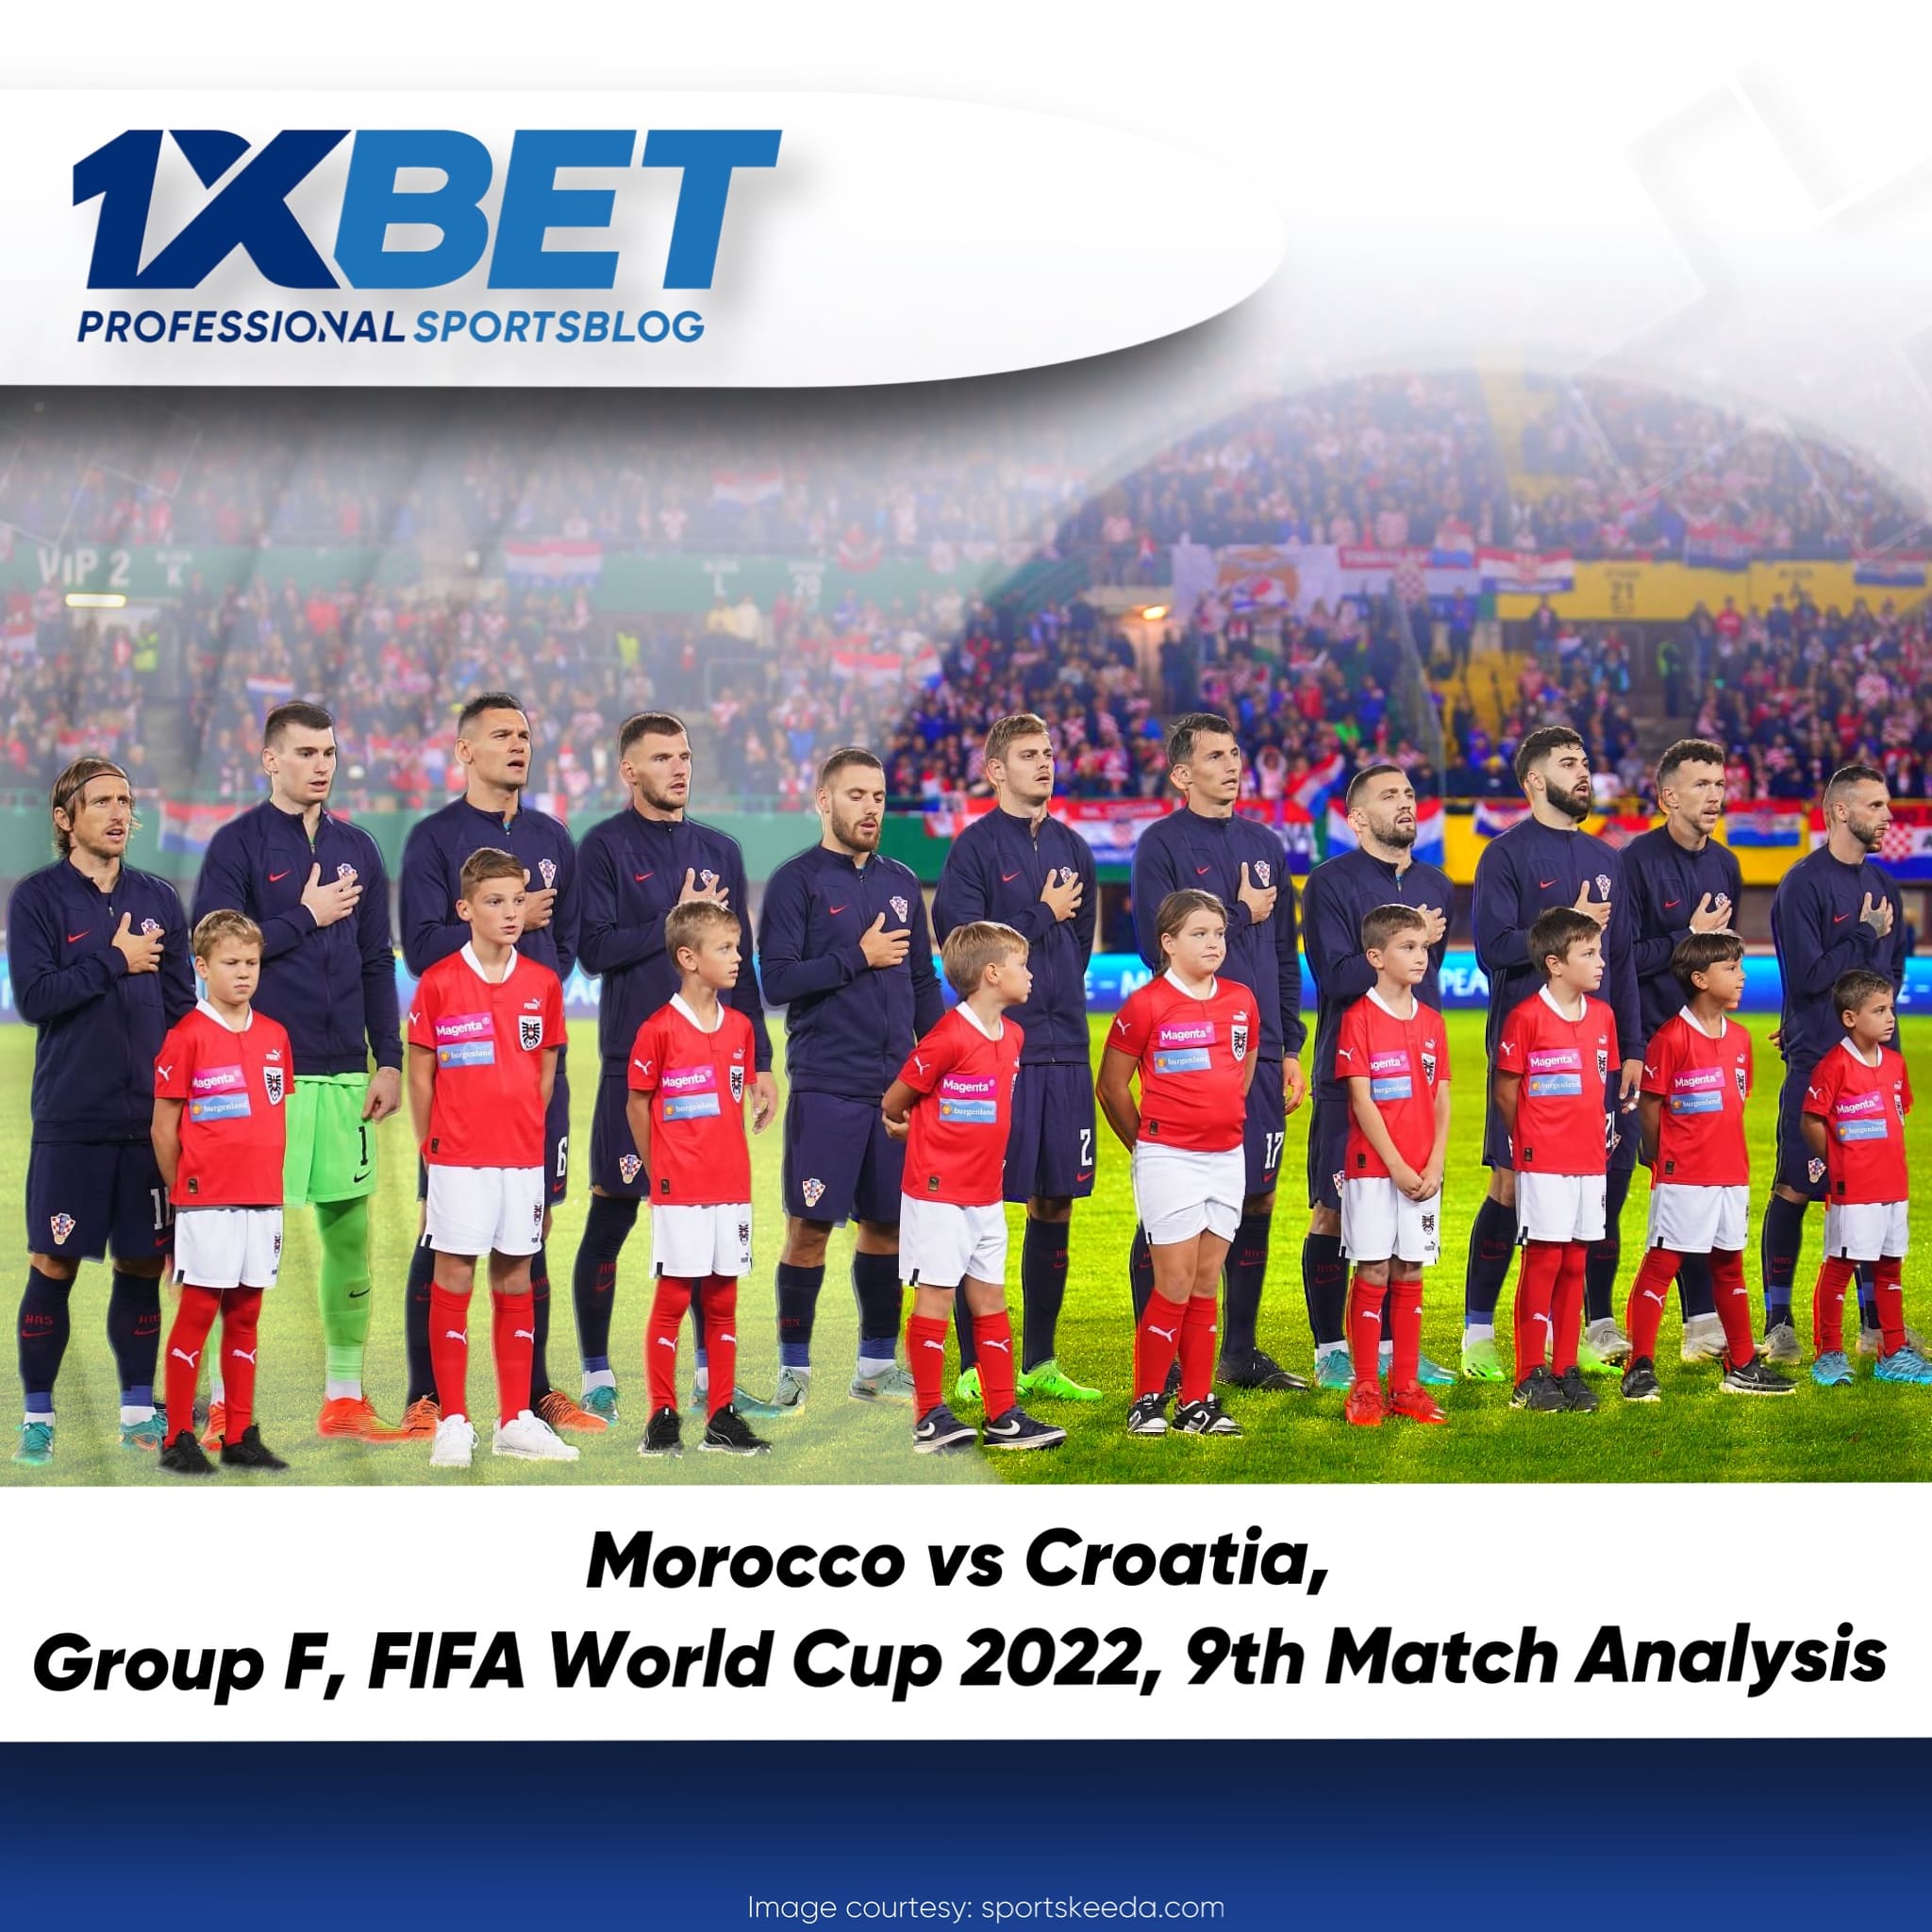 Morocco vs Croatia, Group F, FIFA World Cup 2022, 9th Match Analysis